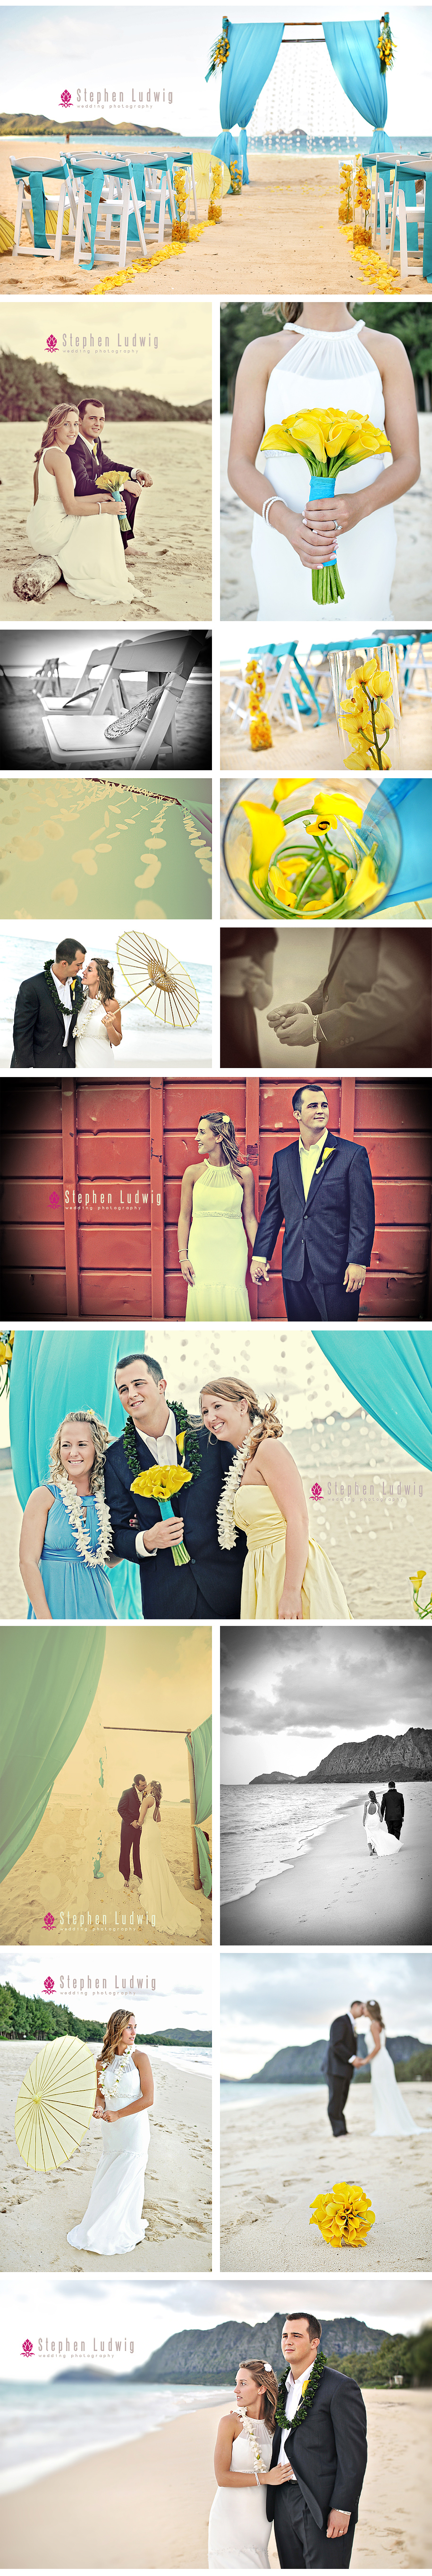 Stephen-Ludwig-Wedding-Photography--Scott-and-Chandra-3